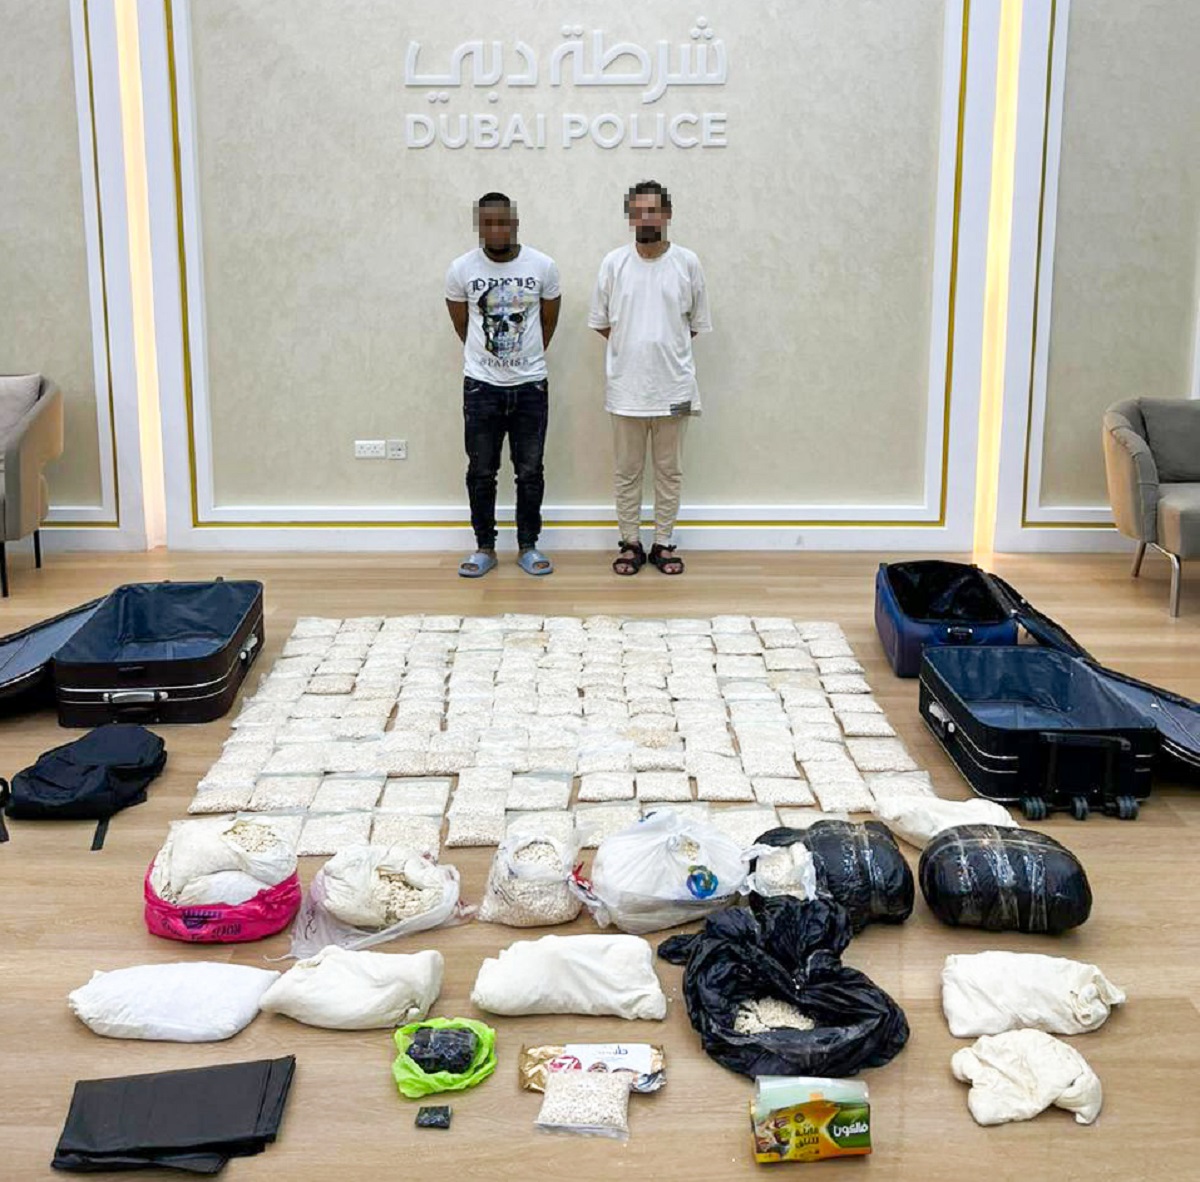 Dubai Drug Gangs Busted Police Arrest 28 And Seize 9m Of Narcotics Arabian Business